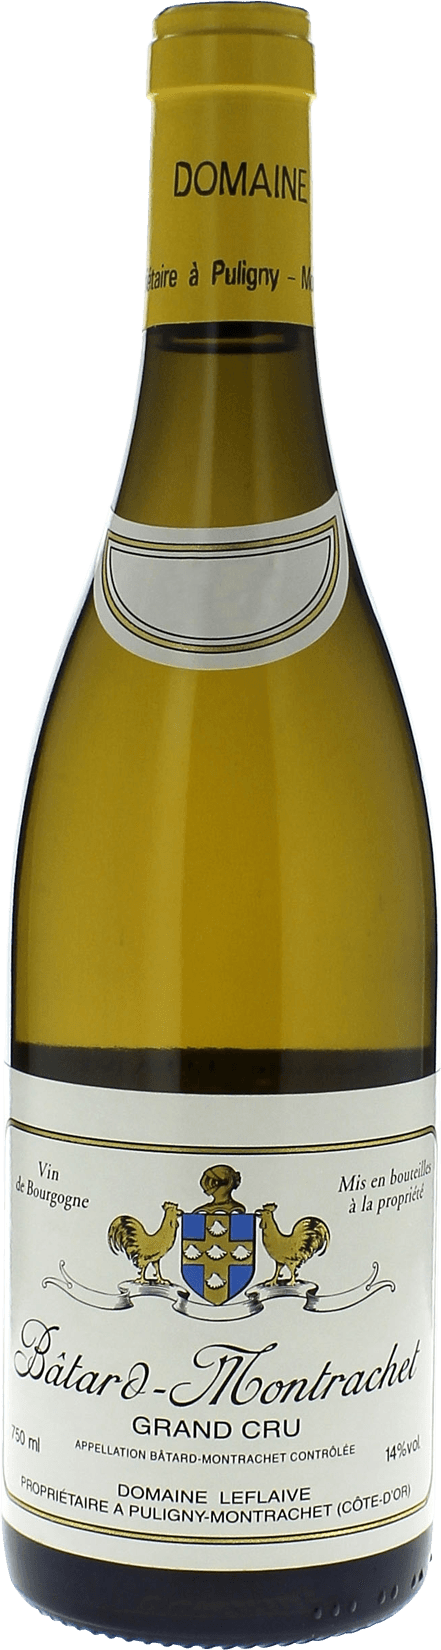 Batard montrachet grand cru 2017 Domaine LEFLAIVE Vincent, Bourgogne blanc